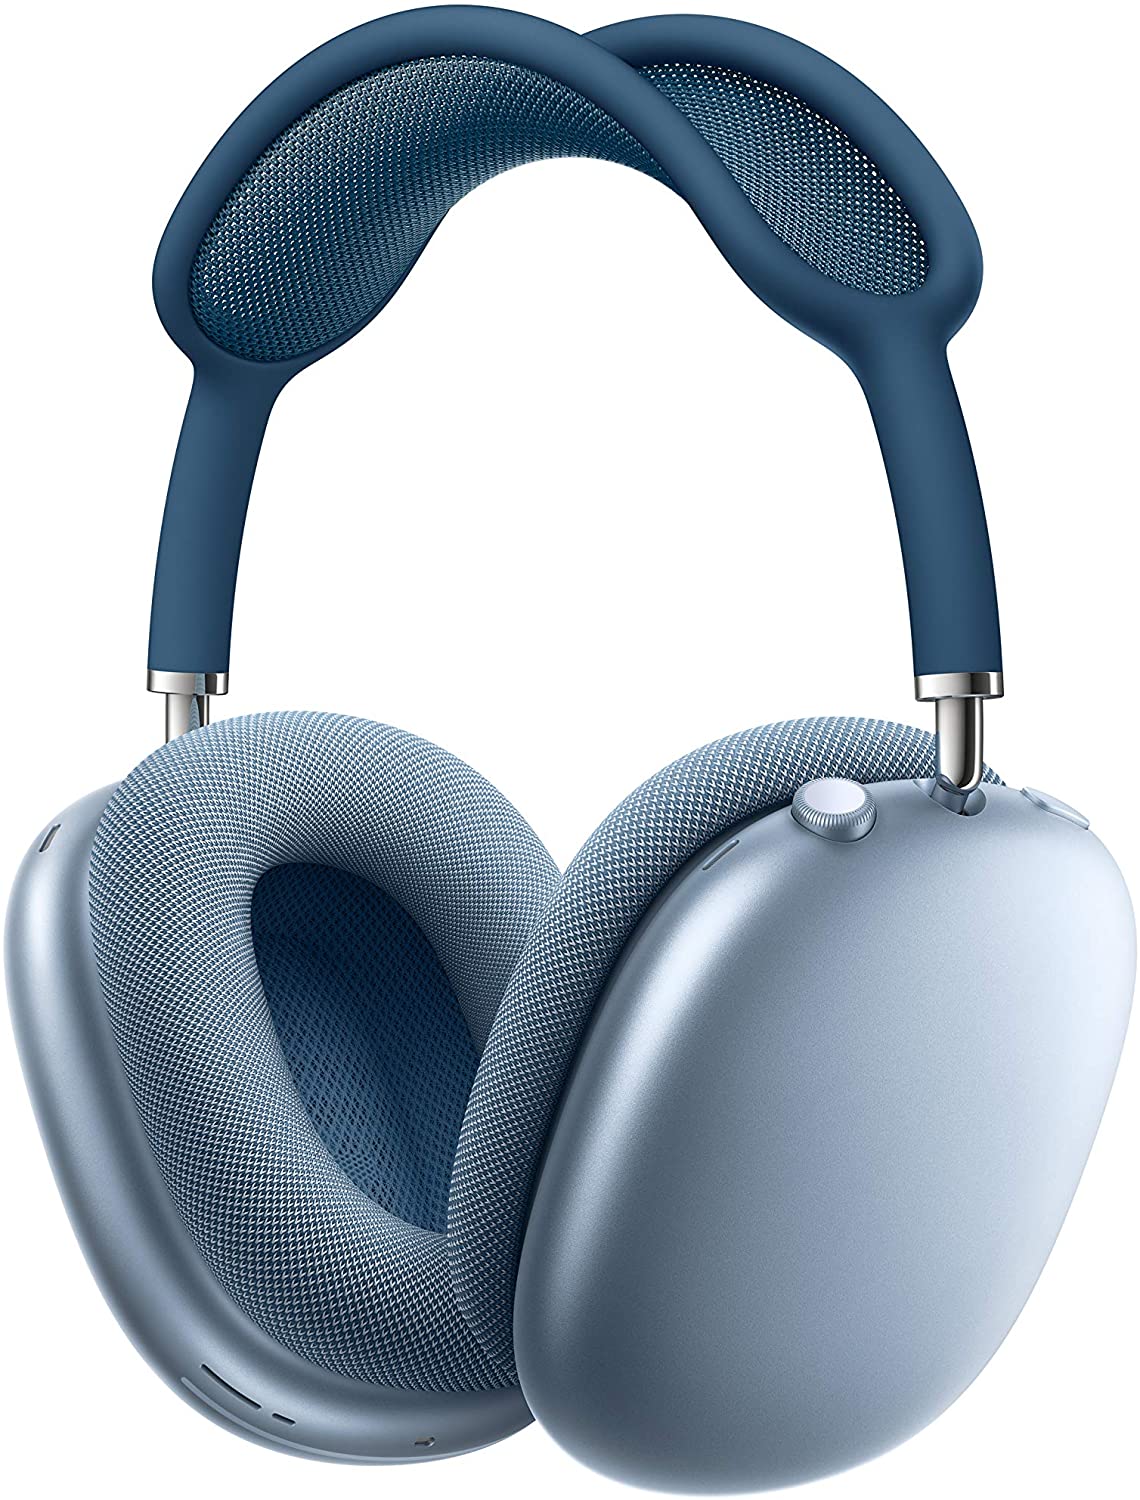 best earbuds for macbook pro